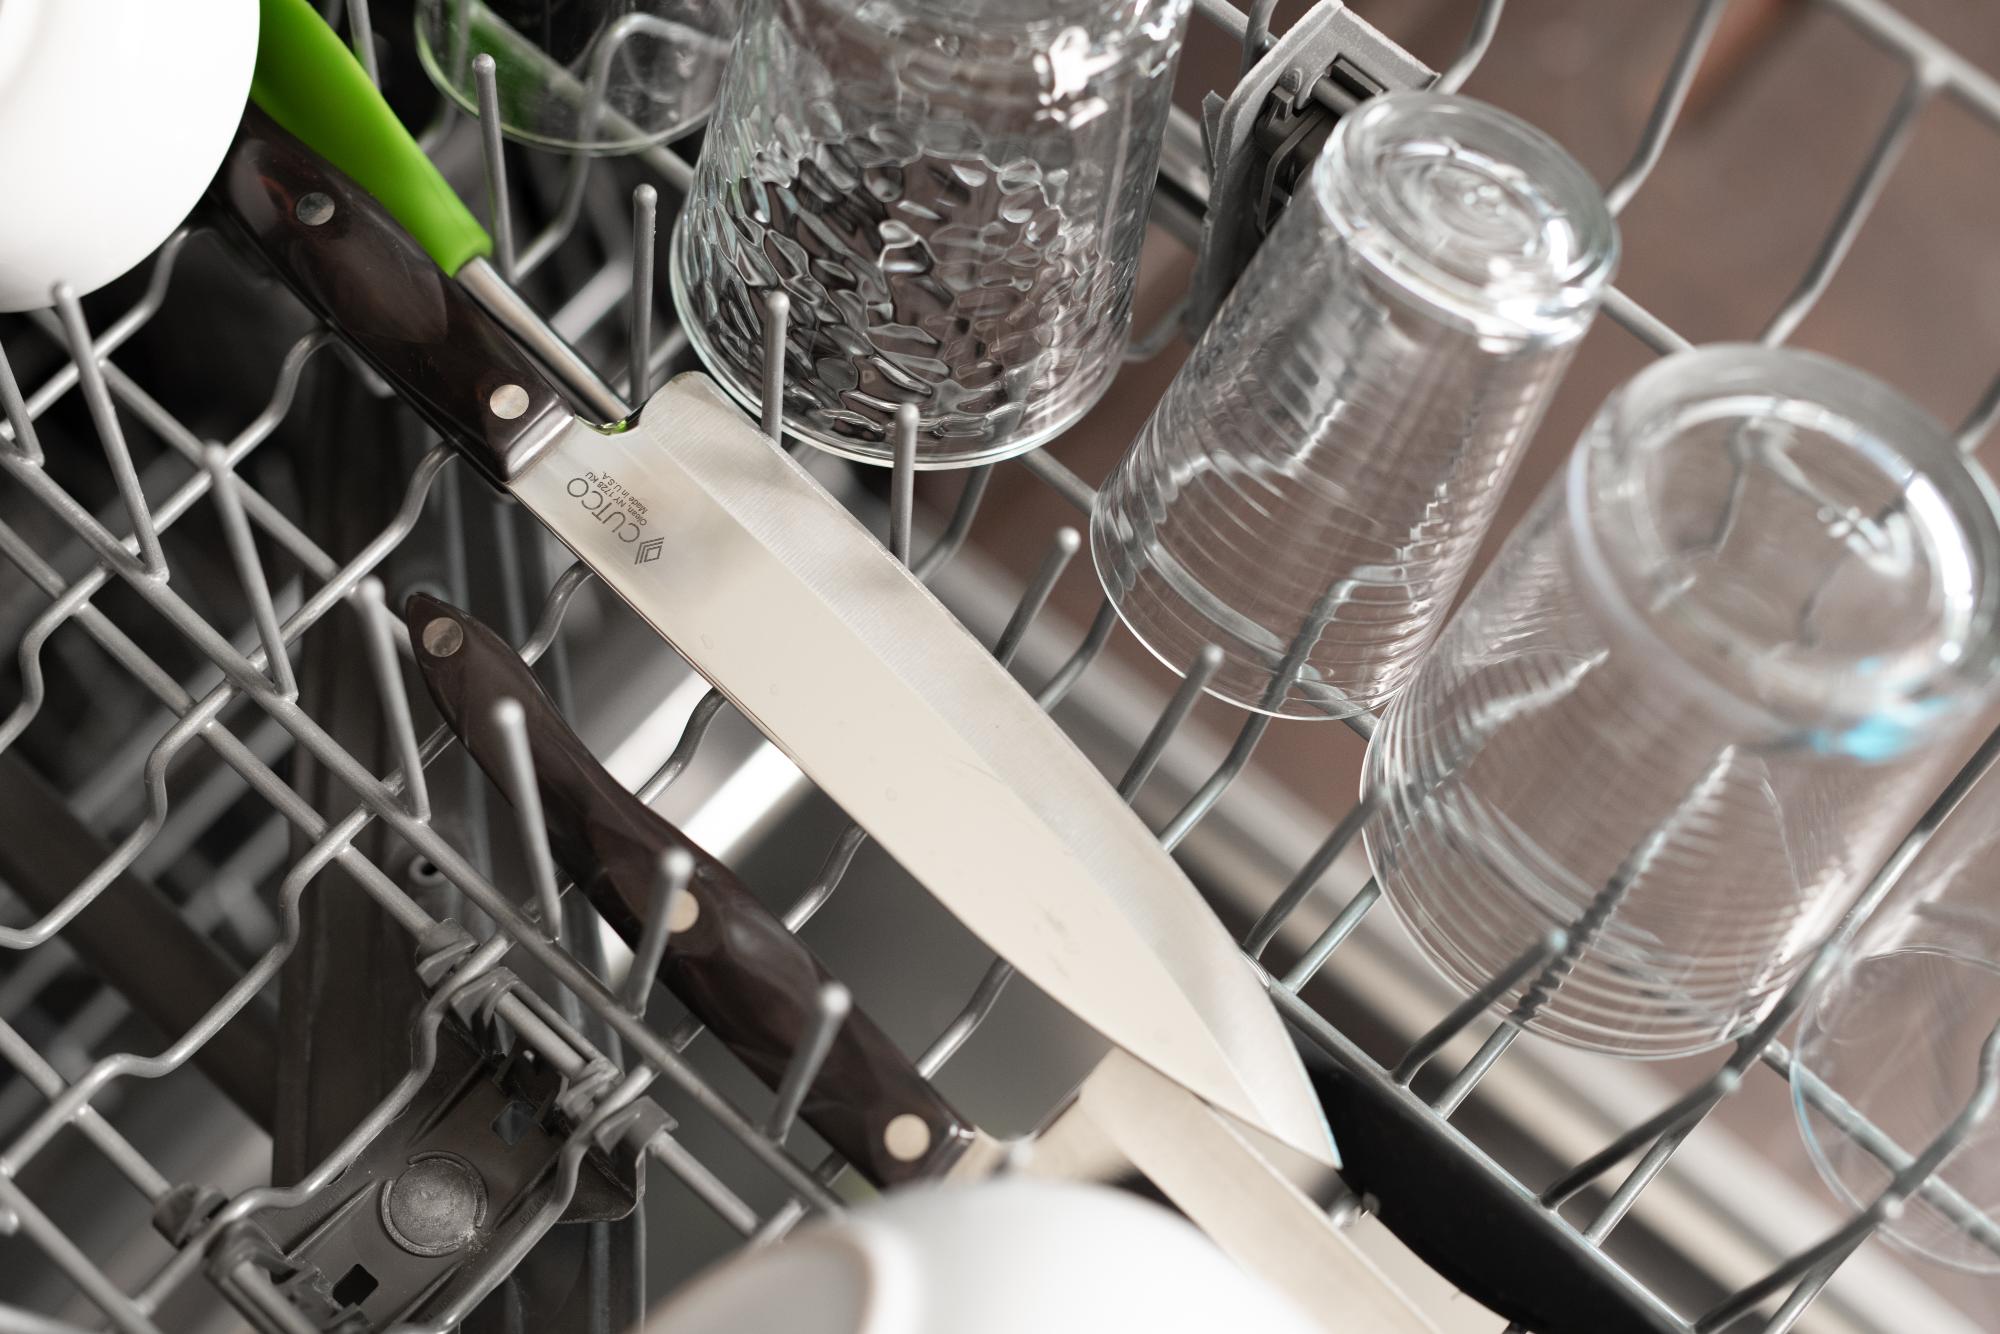 Knife improperly loaded into a dishwasher.